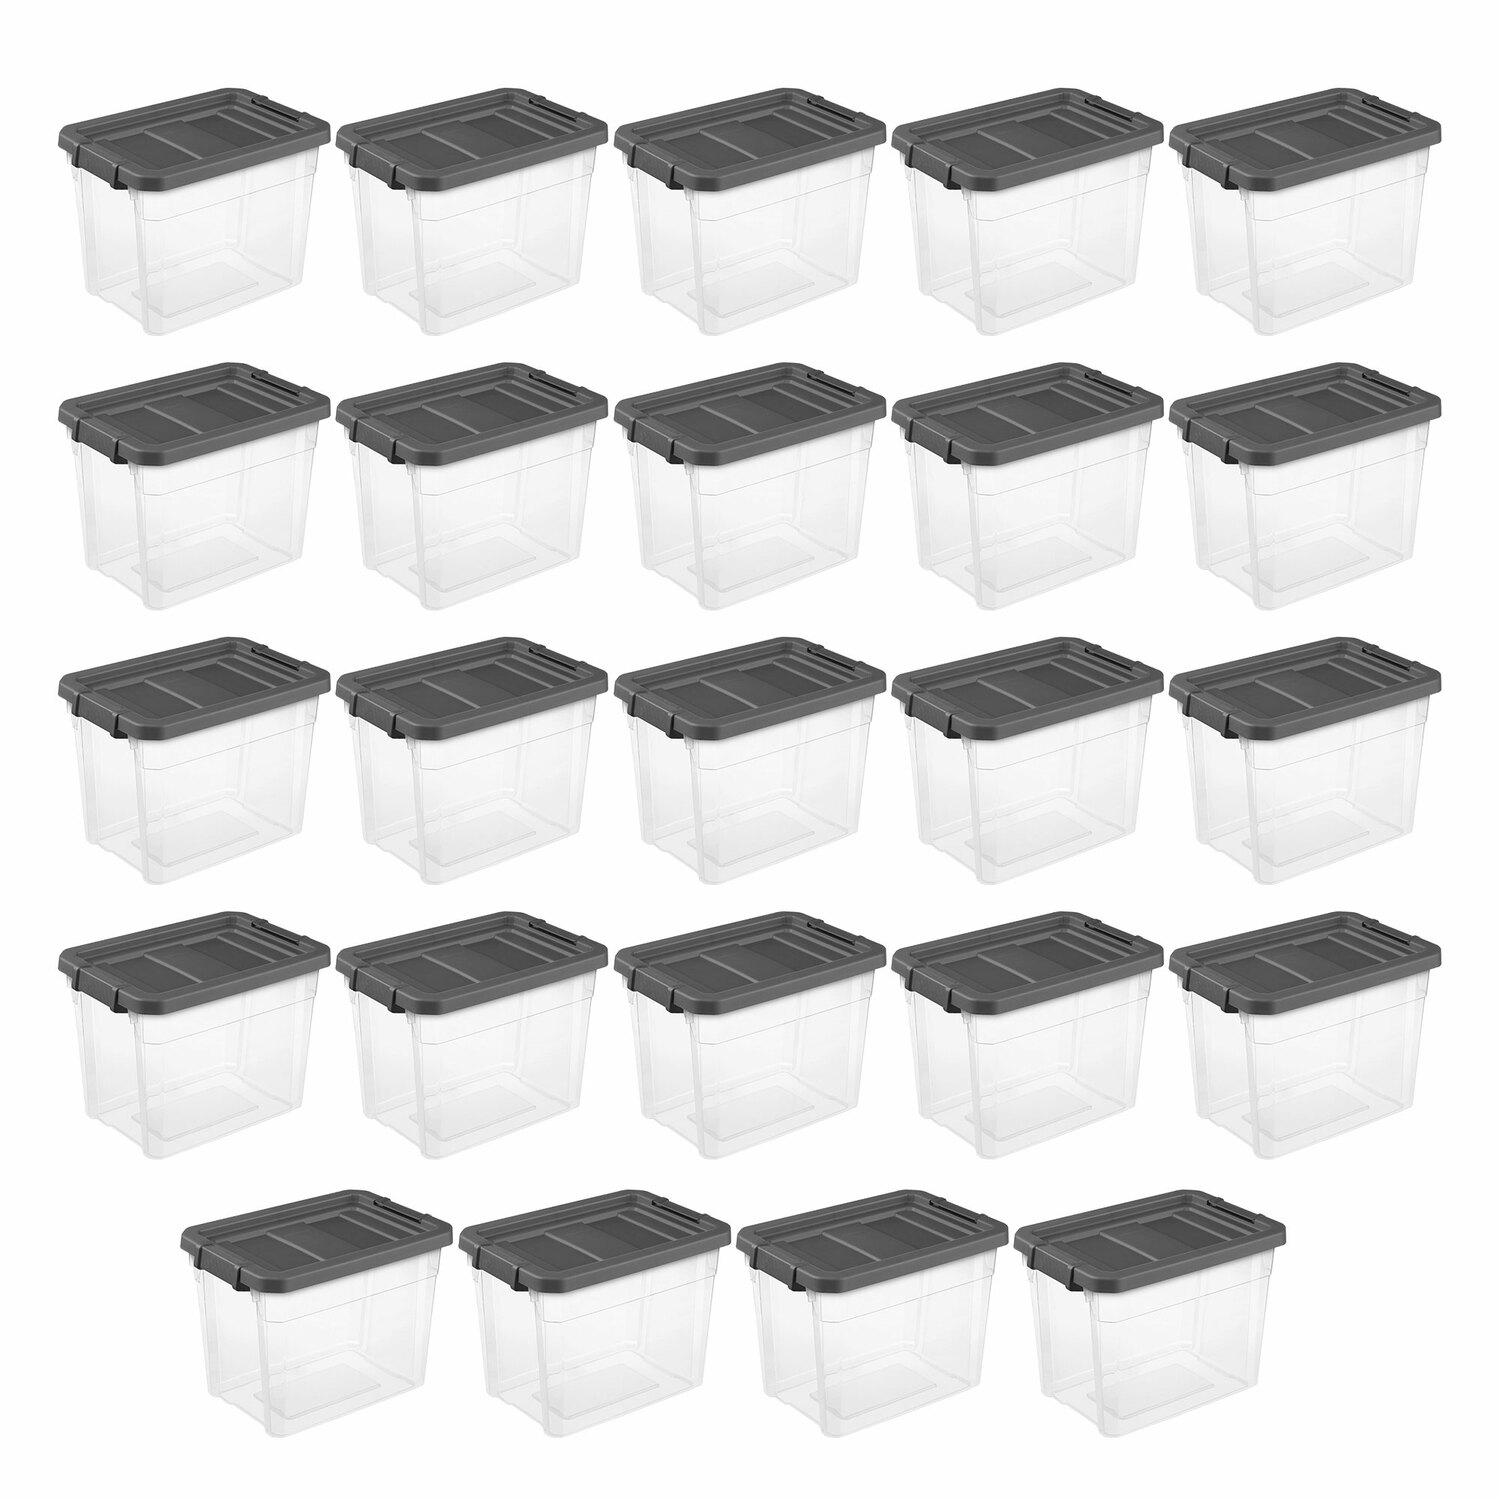 Sterilite 25 qt Capacity Clear Storage Tote w/ Latch Handles (24 Pack)